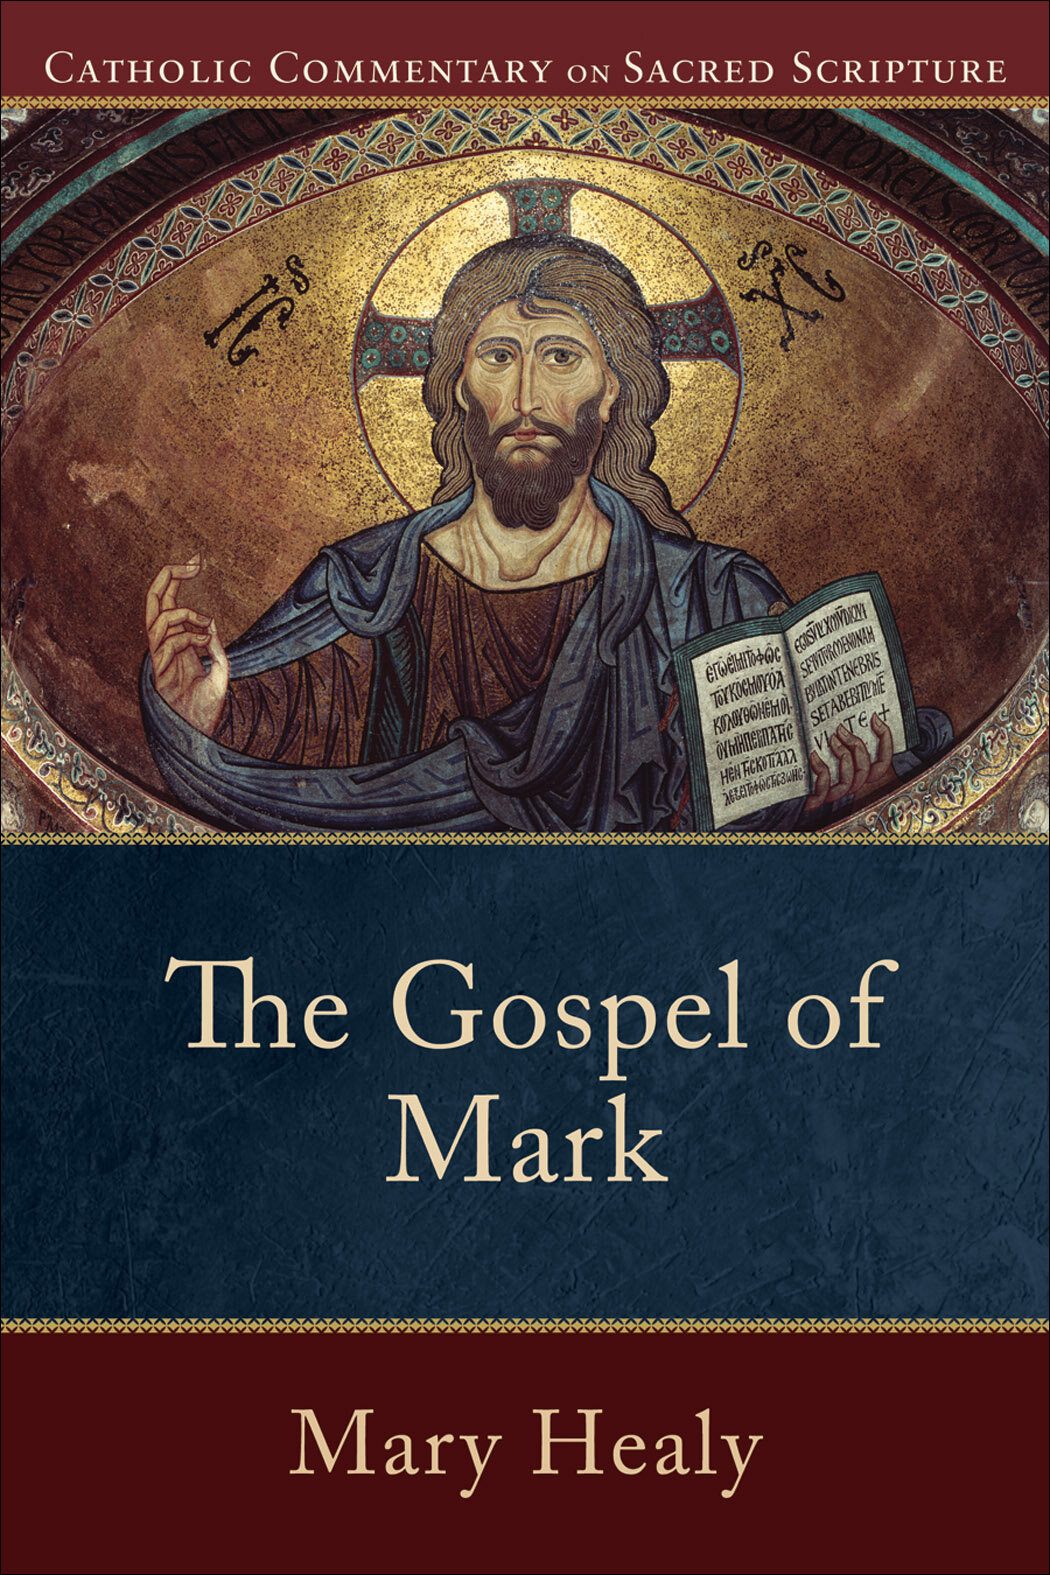 Catholic Commentary on Sacred Scripture: The Gospel of Mark